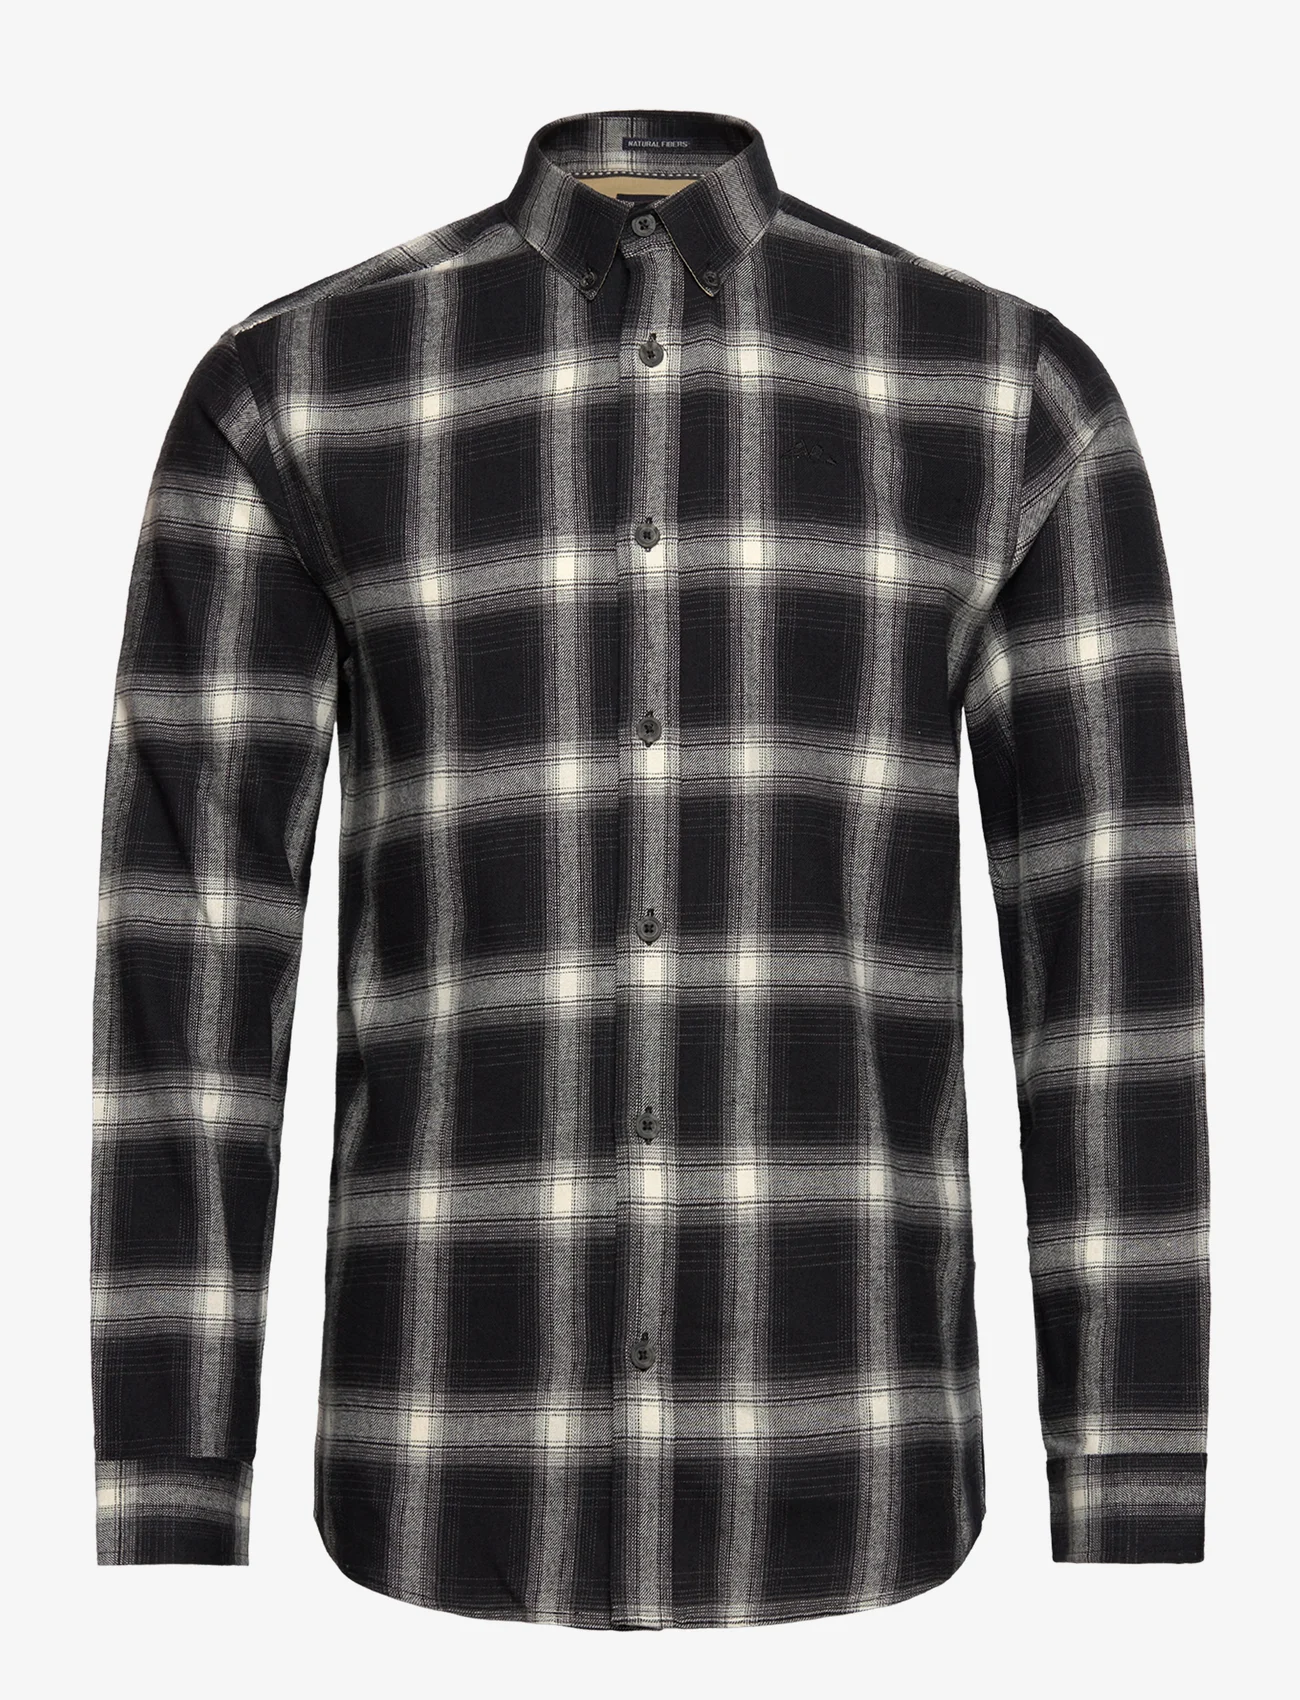 Lindbergh - Brushed checked shirt L/S - checkered shirts - black - 0